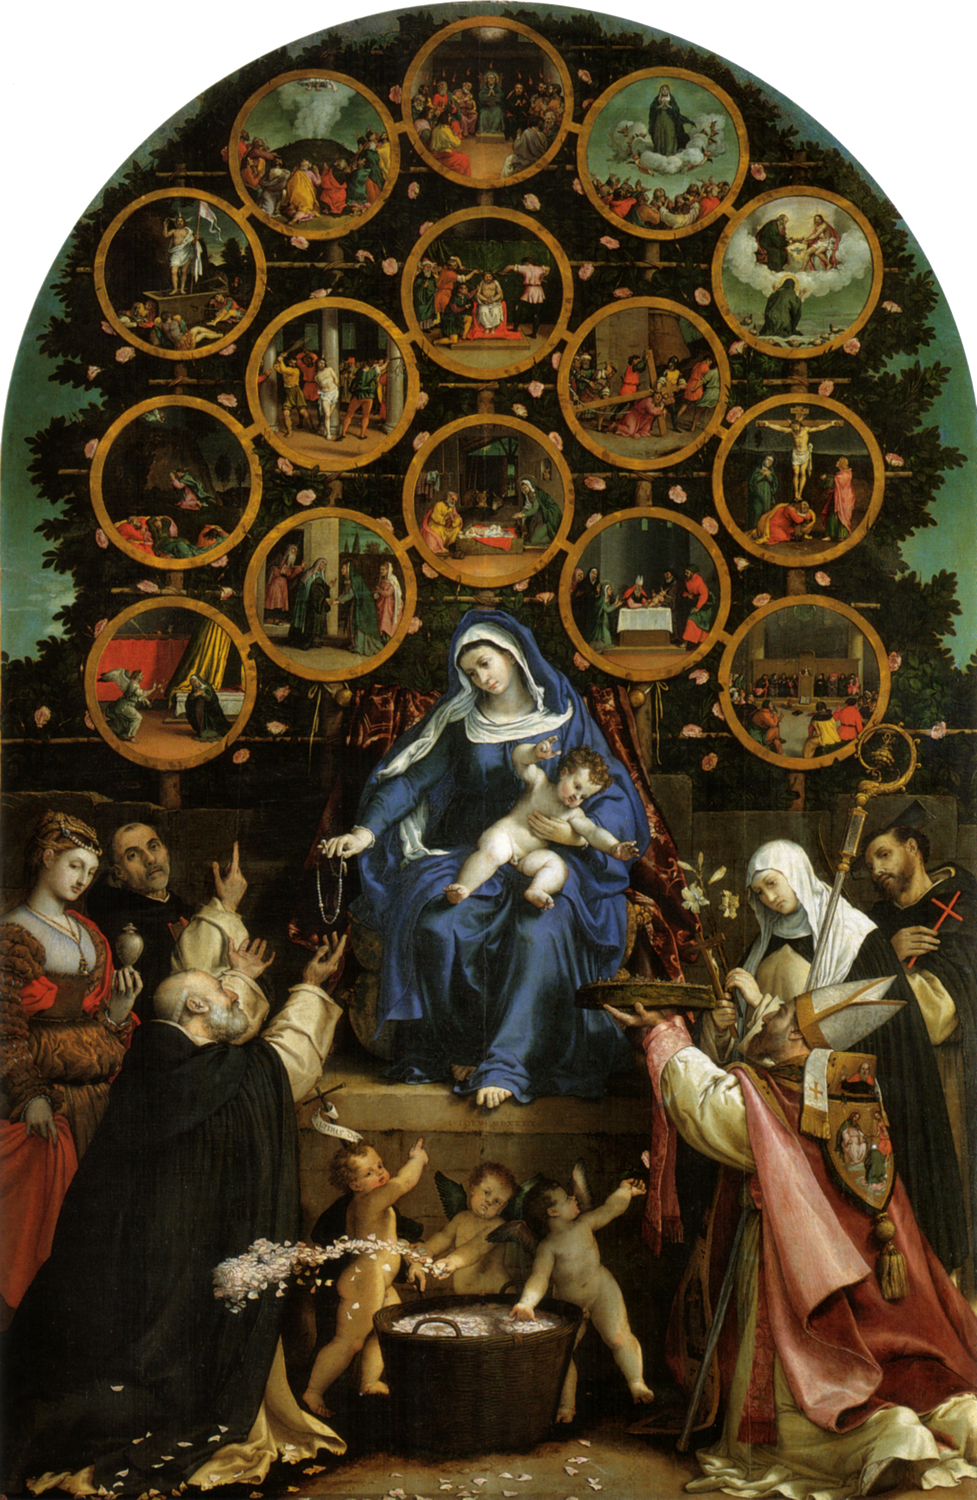 Lorenzo+Lotto-1480-1557 (62).jpg